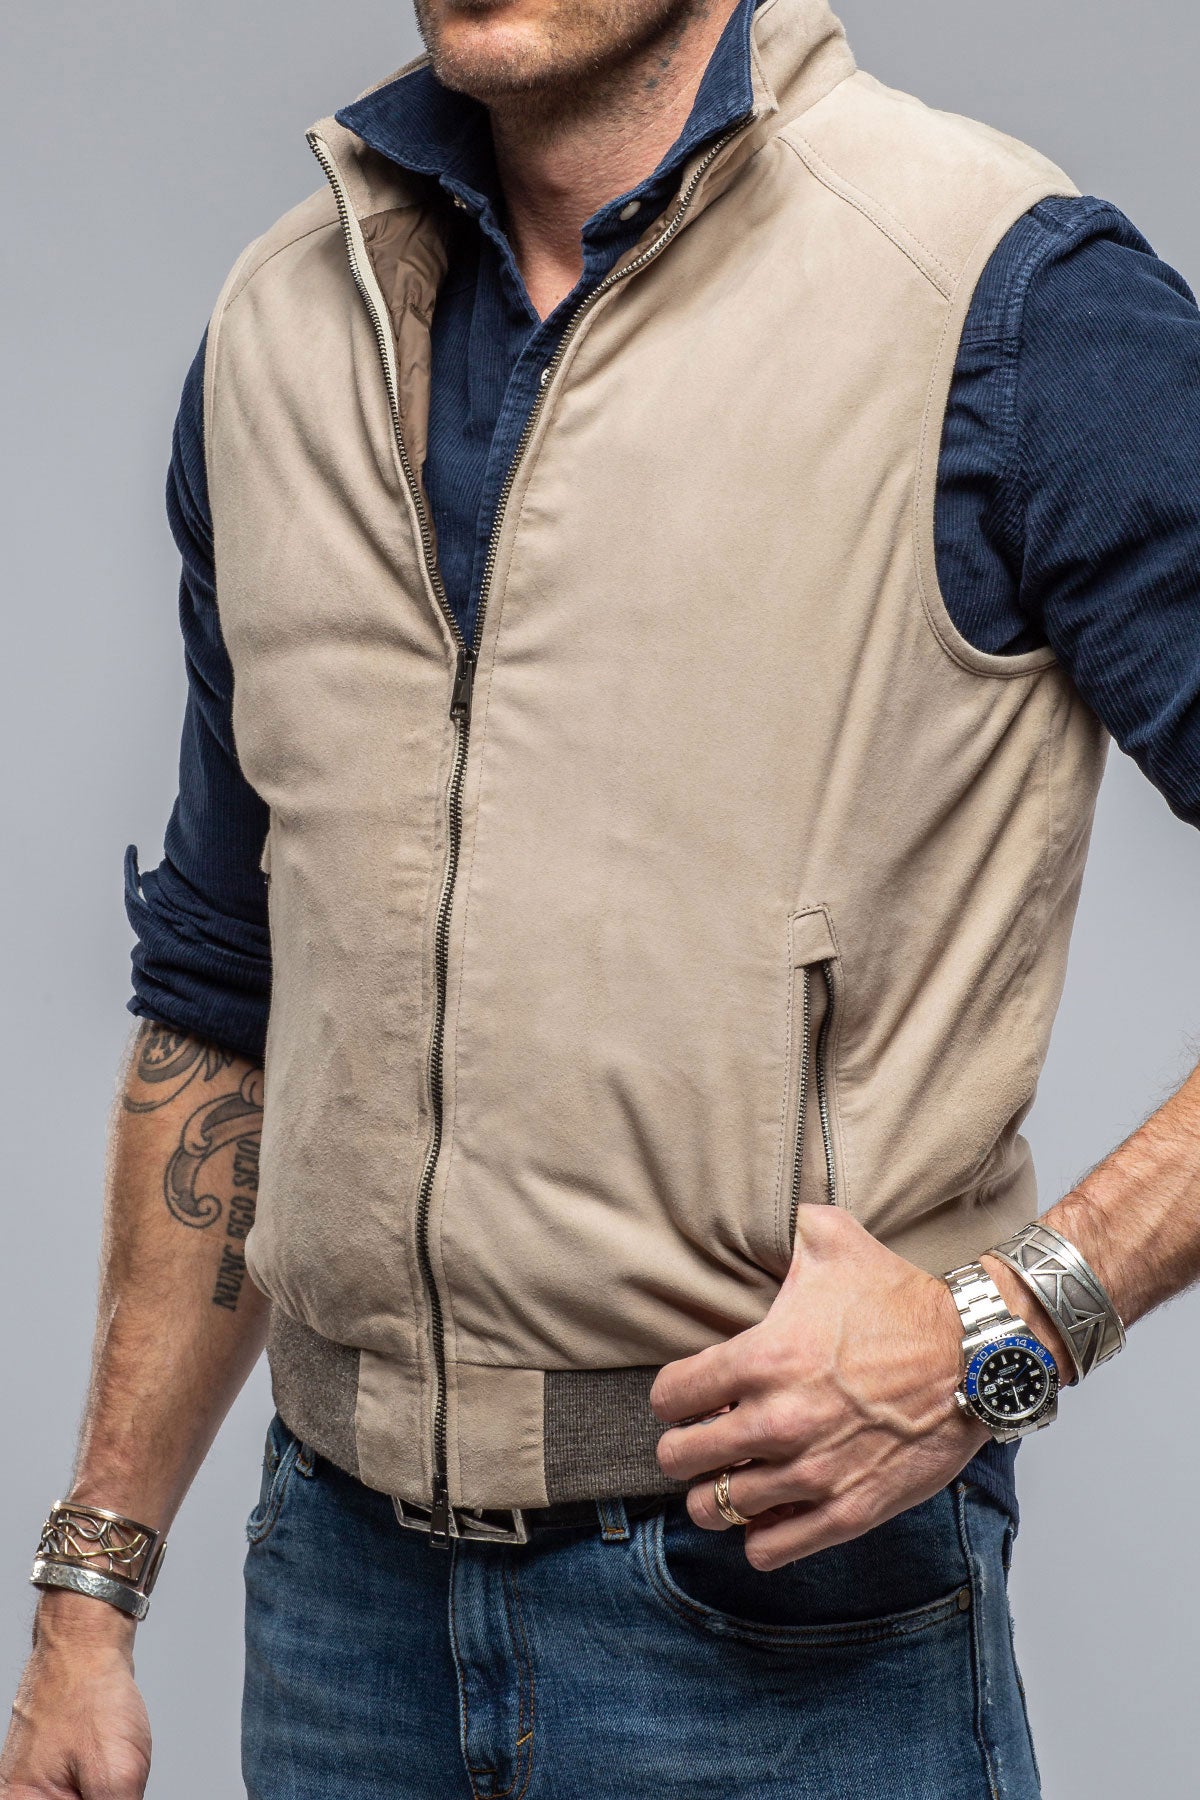 Esko Goat Suede Vest | Samples - Mens - Outerwear - Leather | DiBello